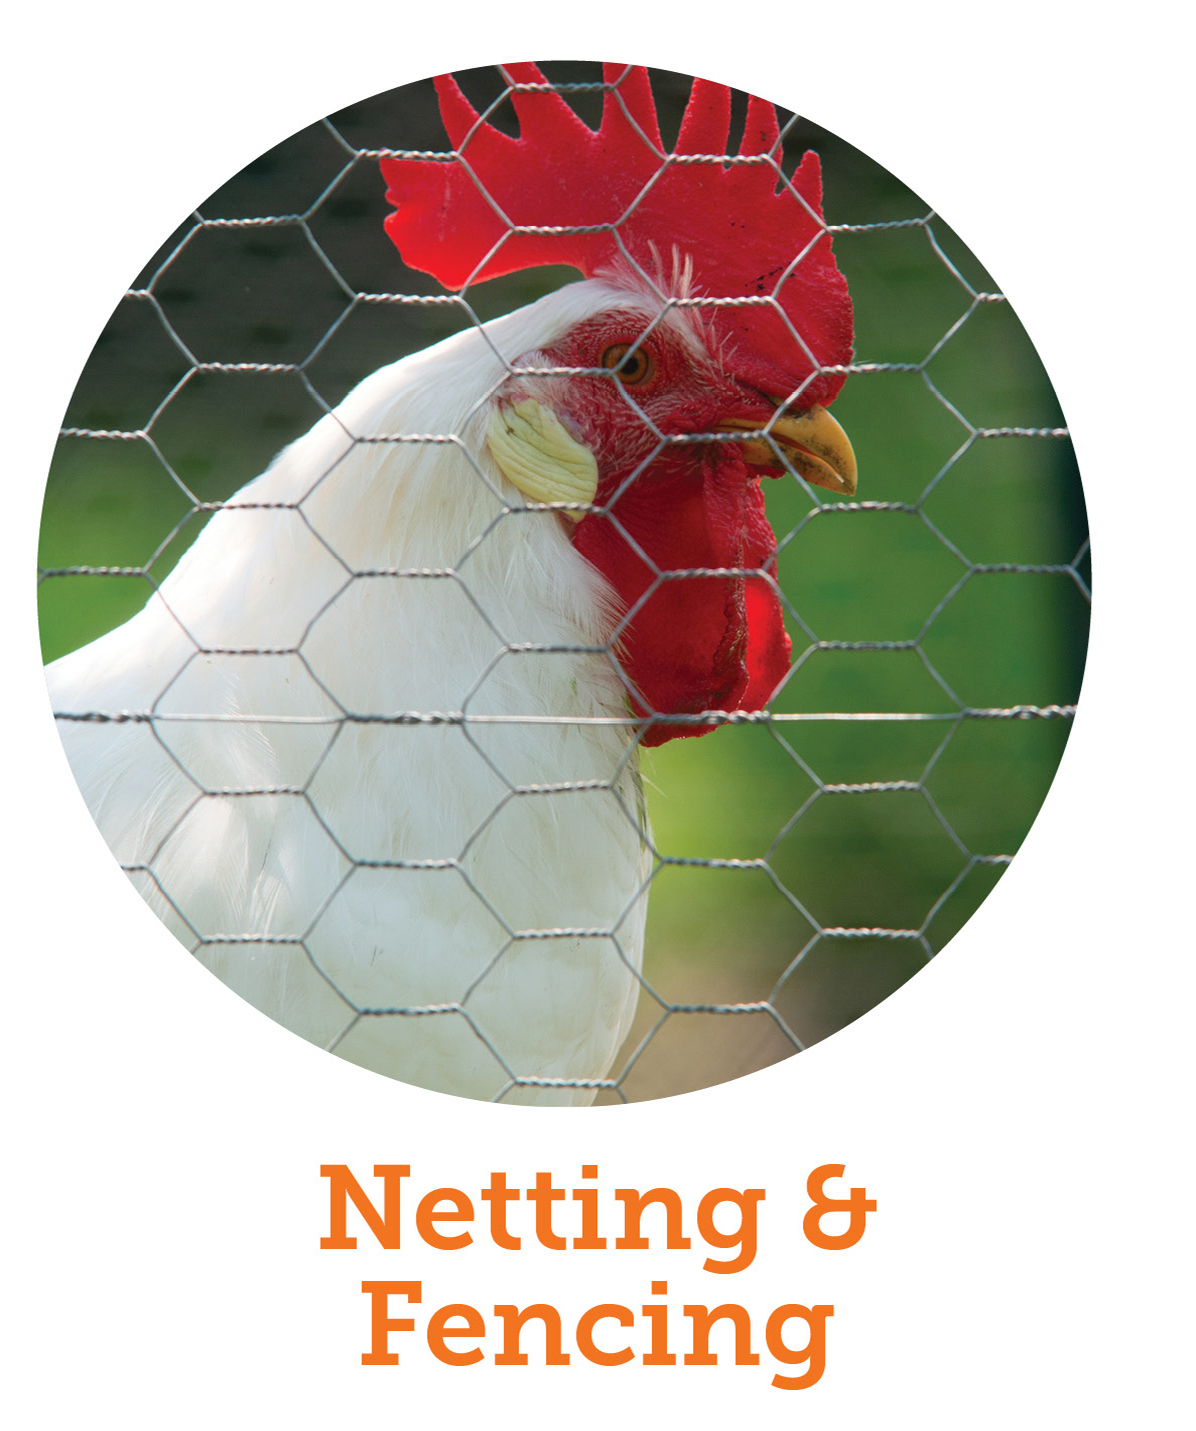 Essentials, Netting & Fencing, Opens in new window.